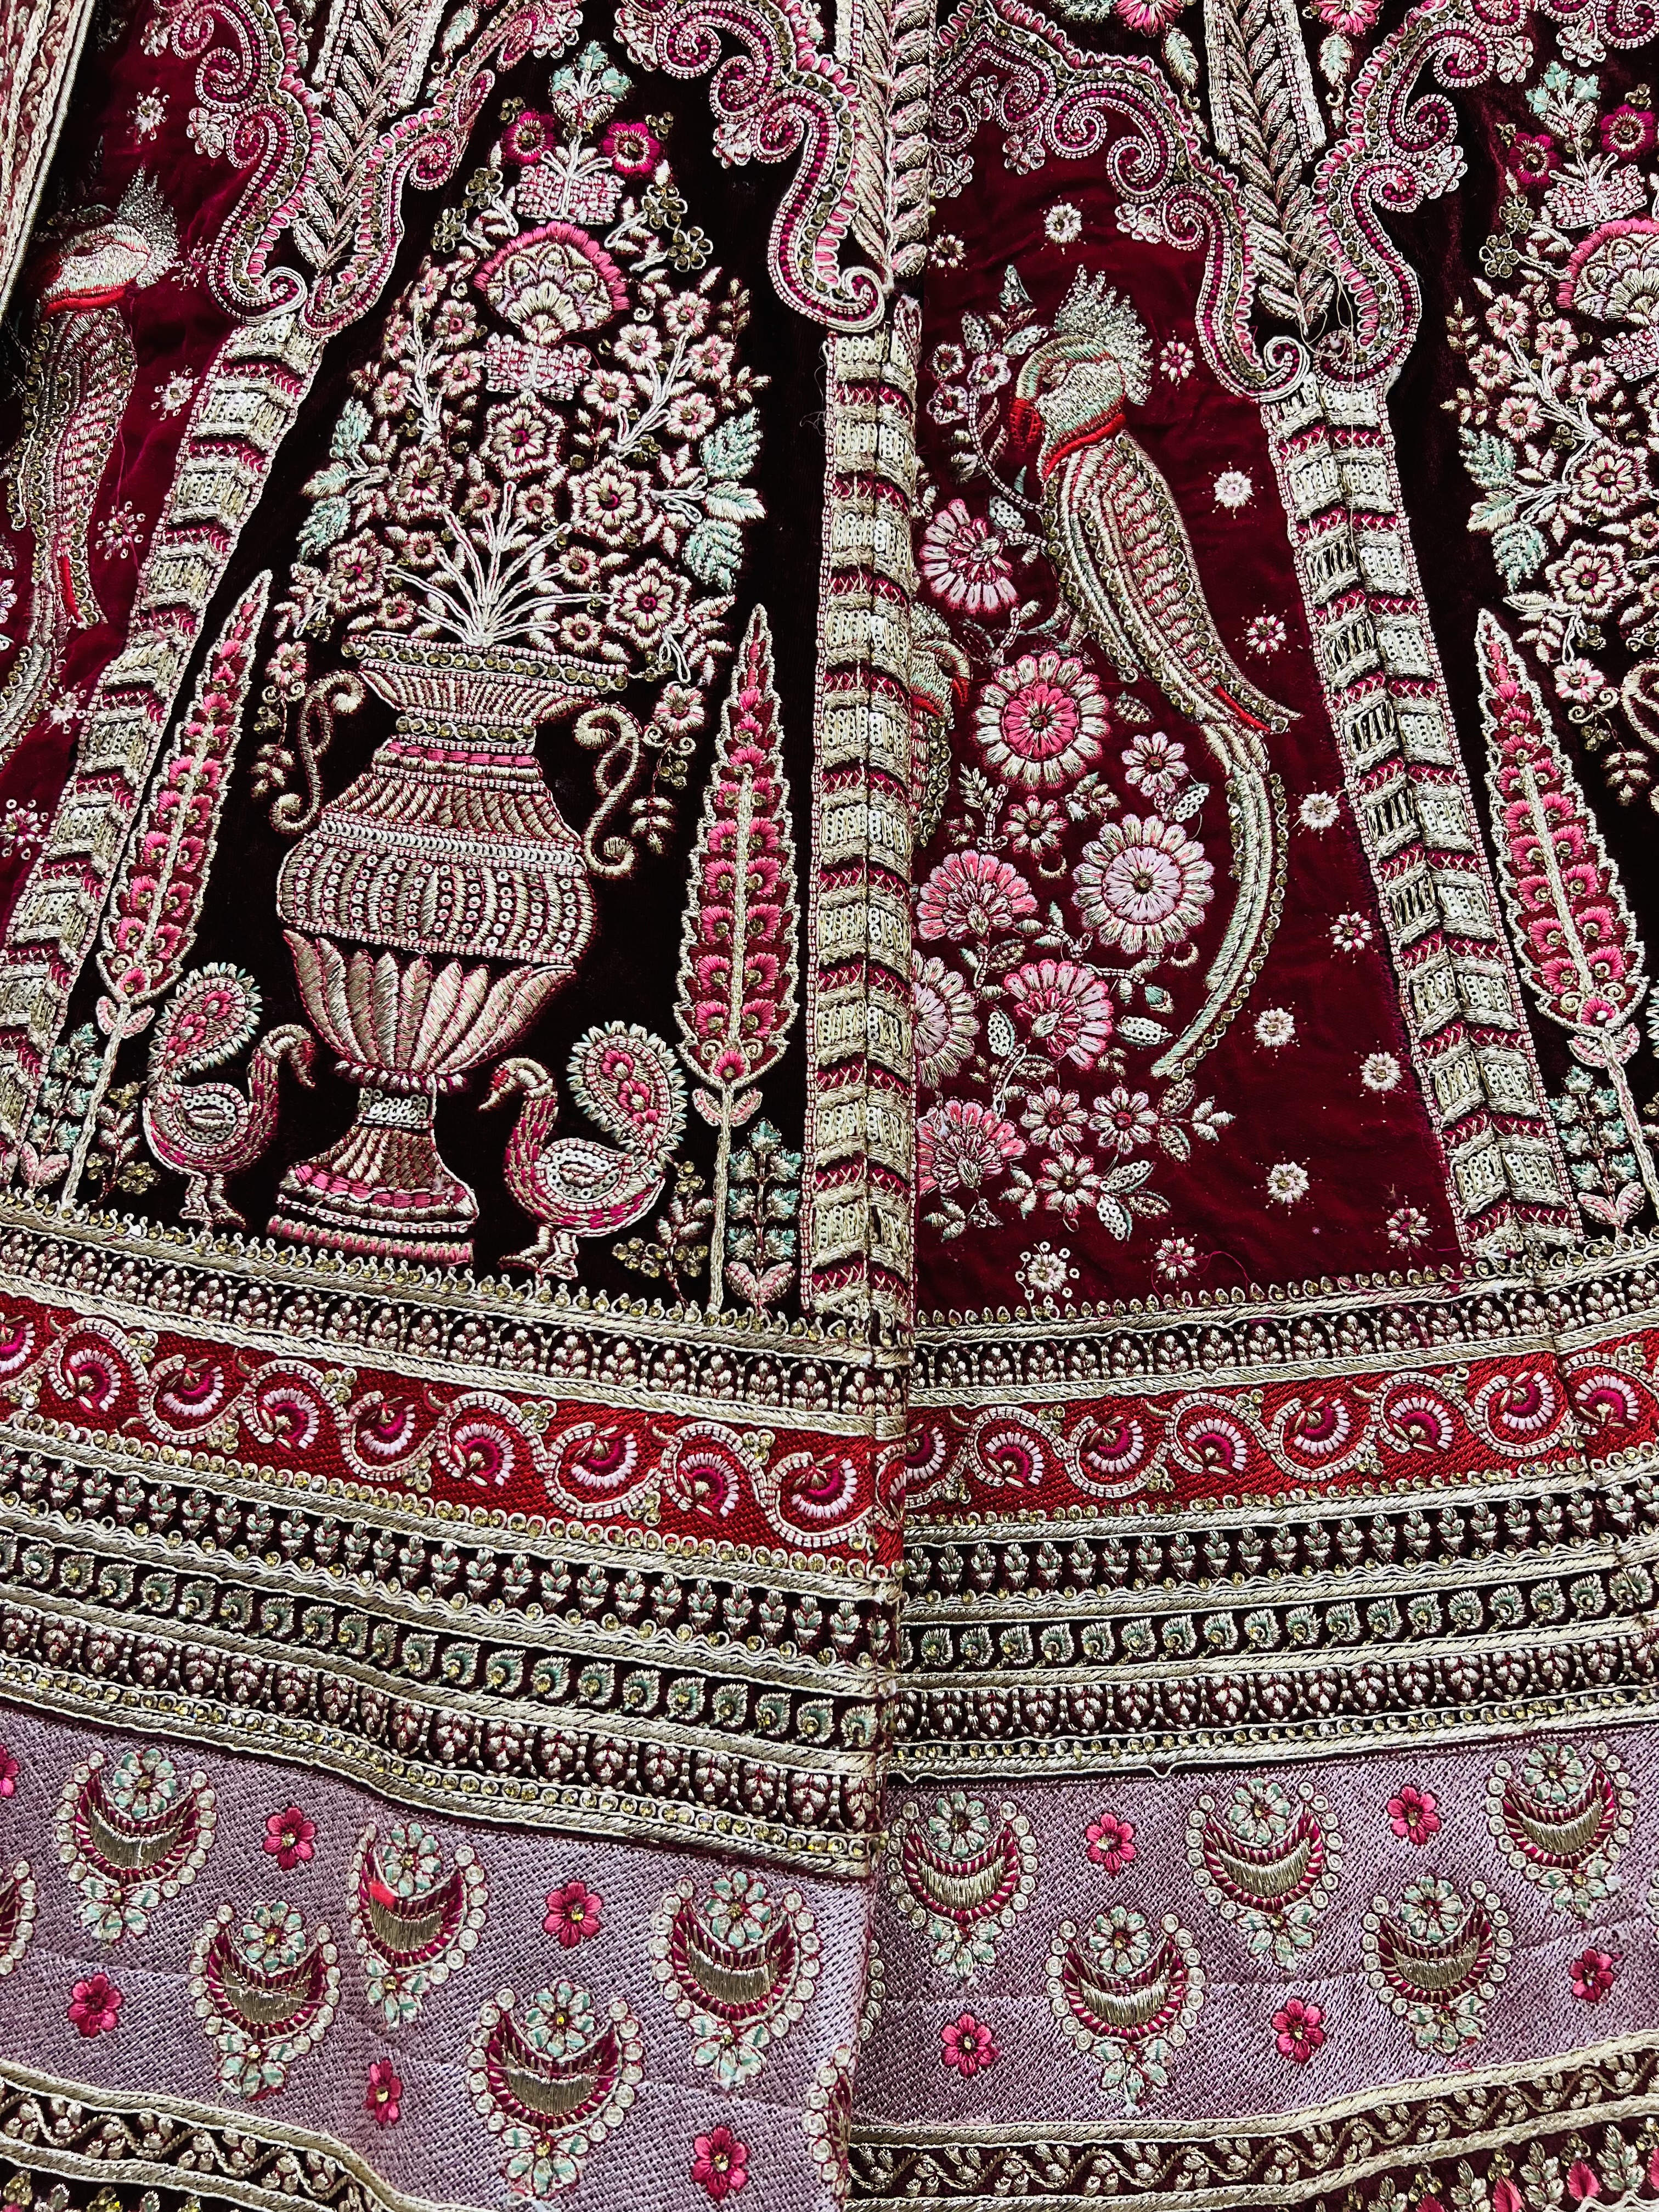 Velvet Wedding Lehenga Choli Maroon in Embroidered